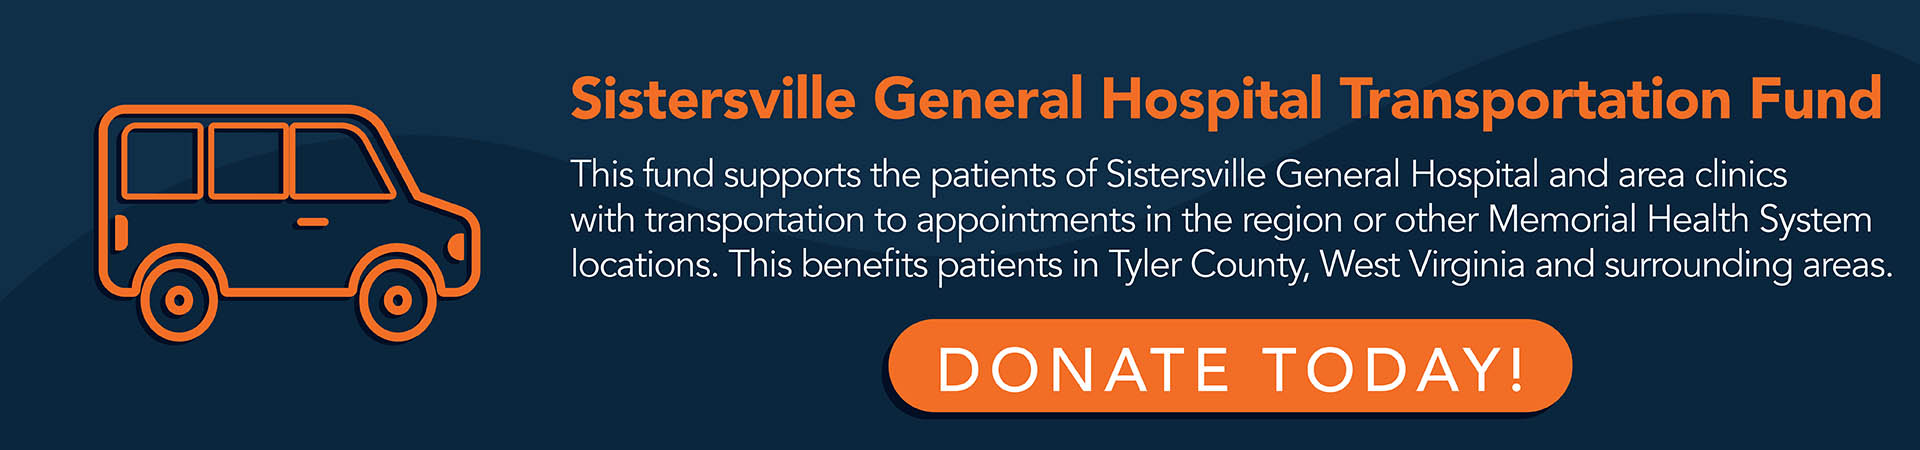 Sistersville General Hospital Transportation Fund